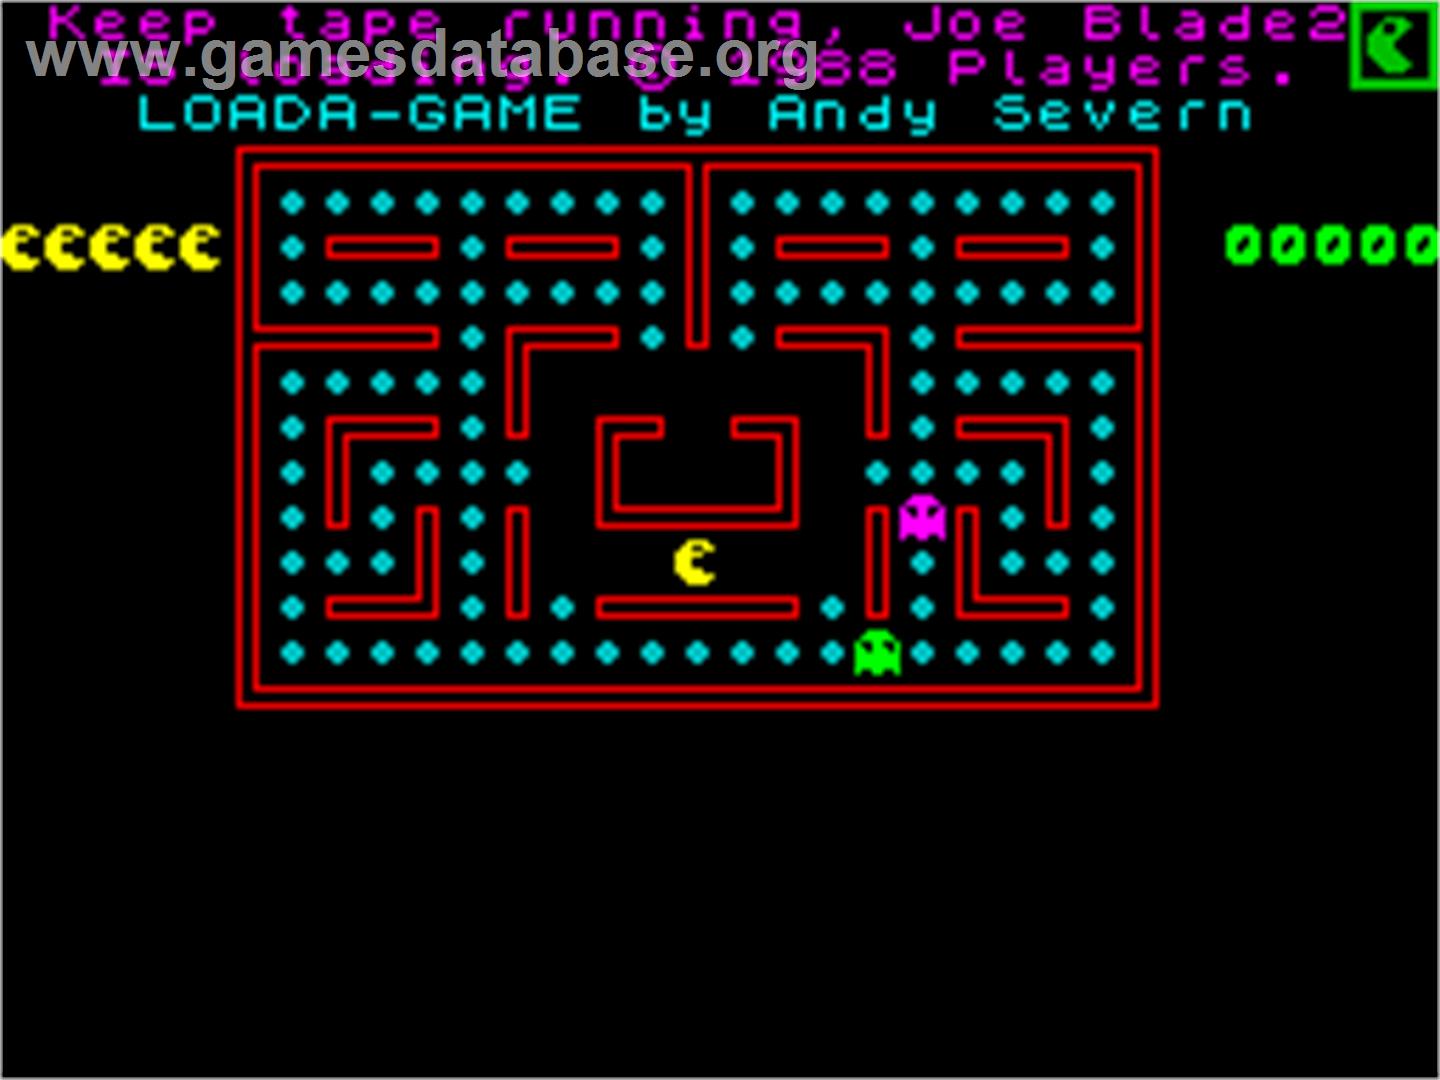 Joe Blade II - Sinclair ZX Spectrum - Artwork - Title Screen